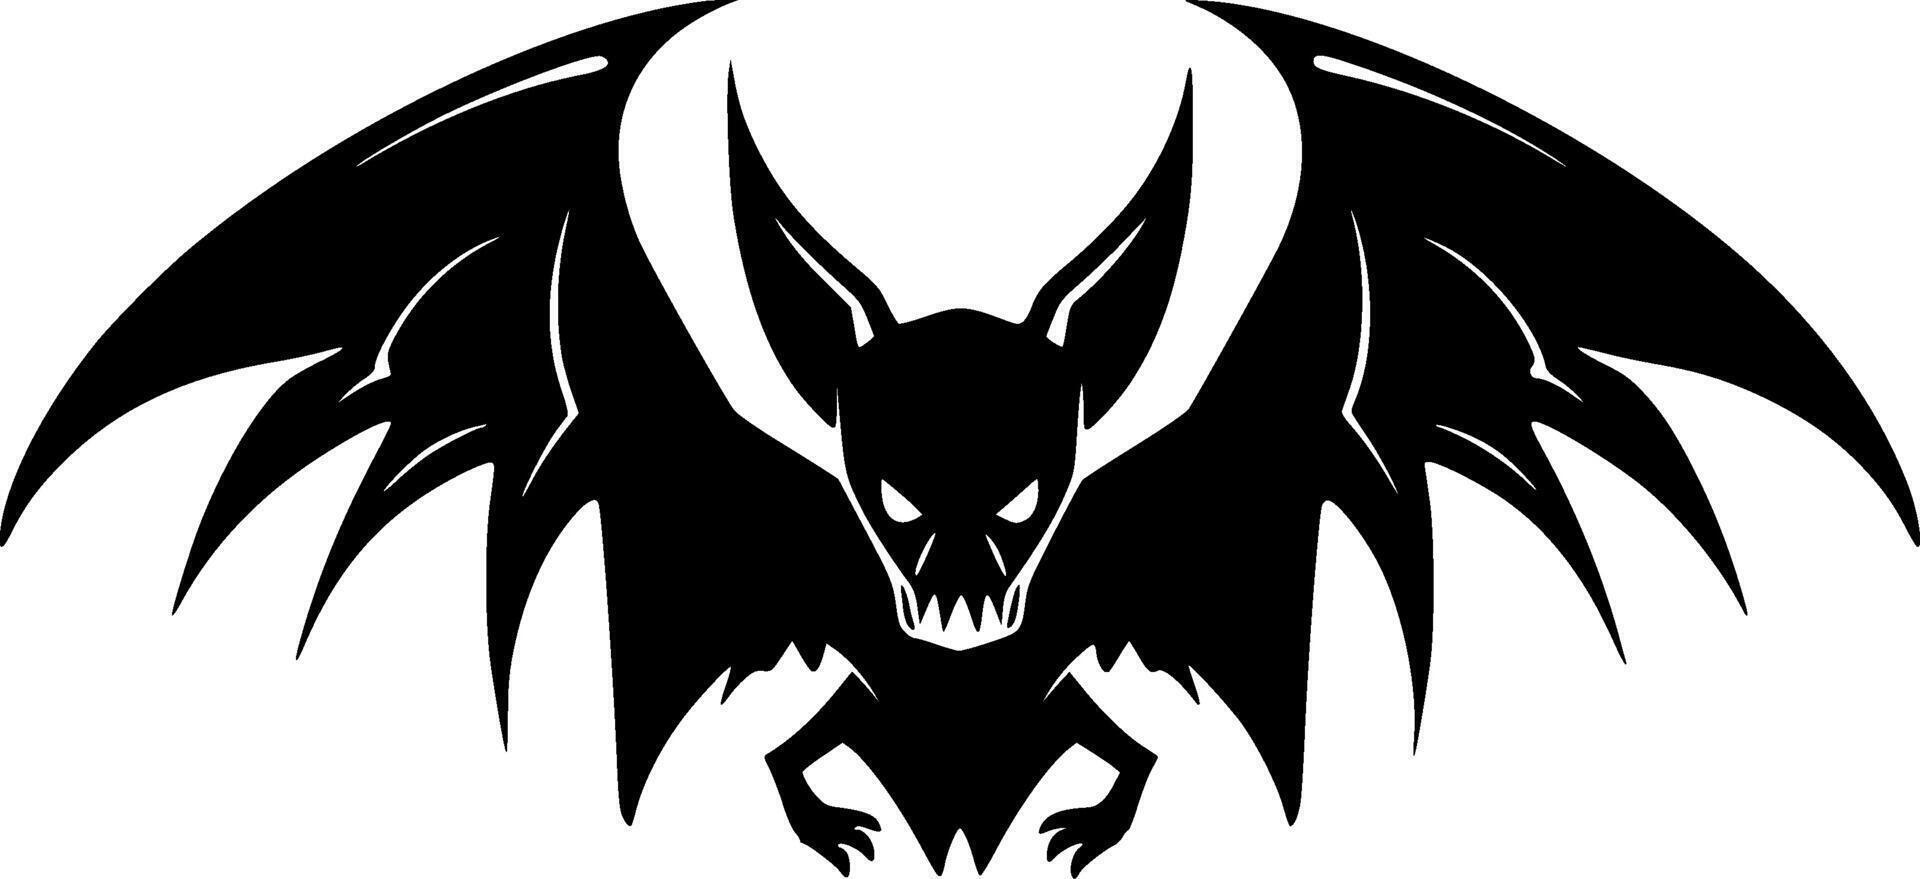 Bat, Black and White illustration vector